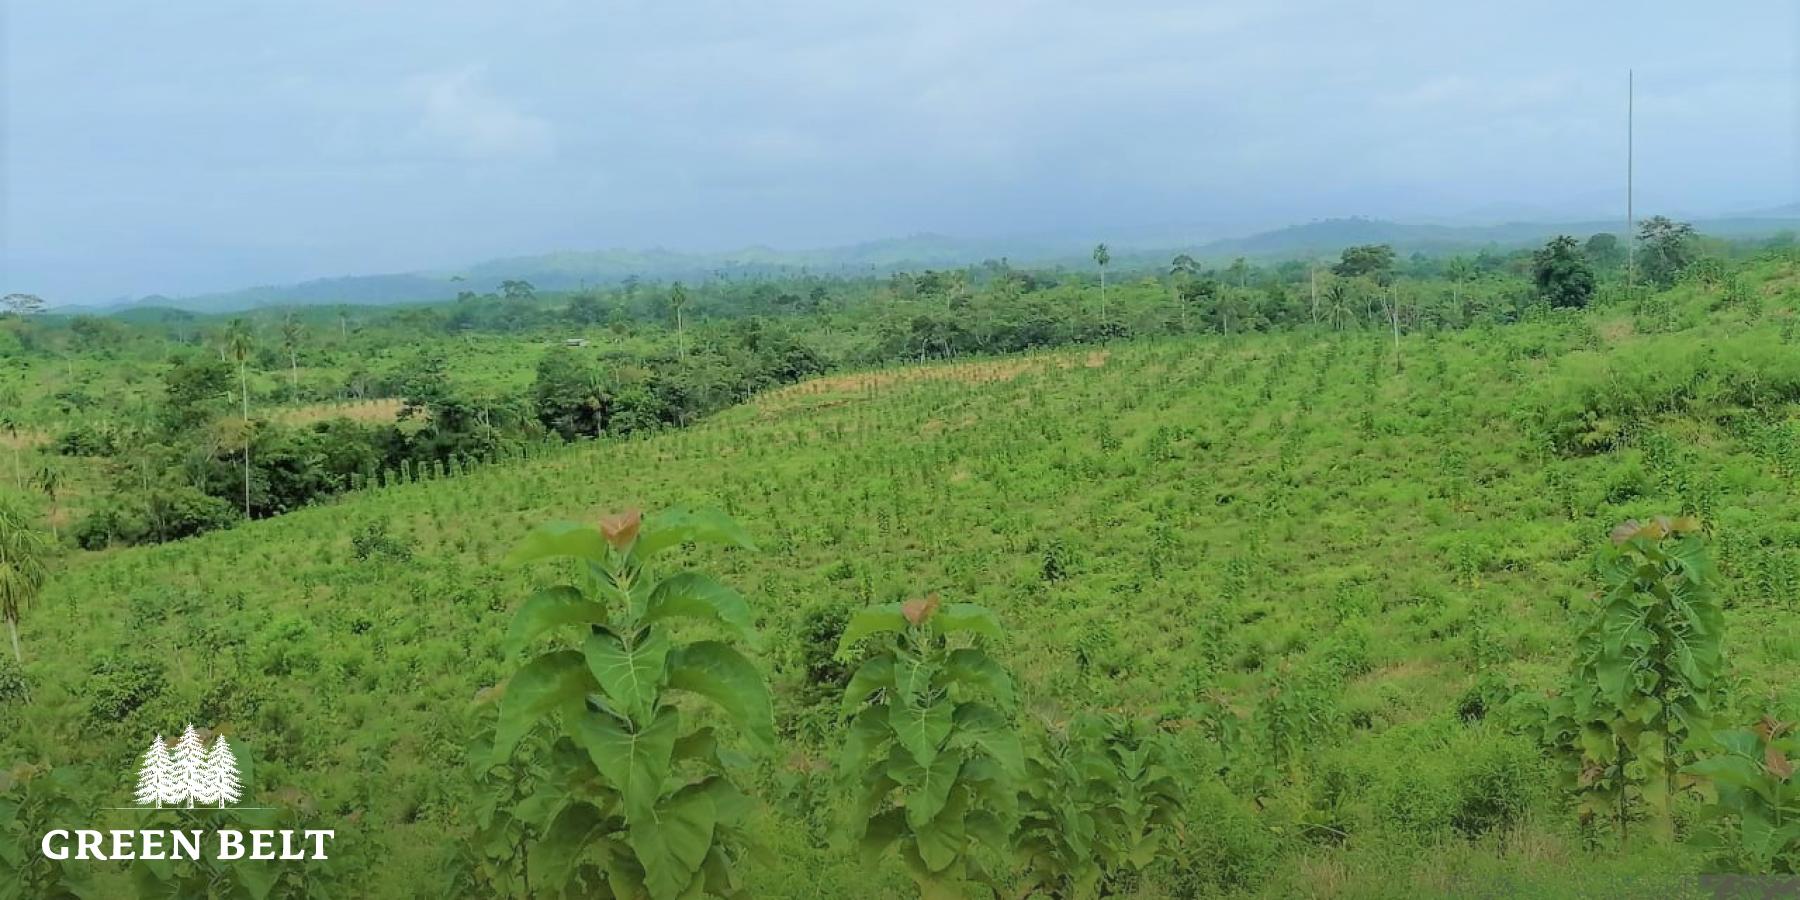 Green Belt plants in Panama too